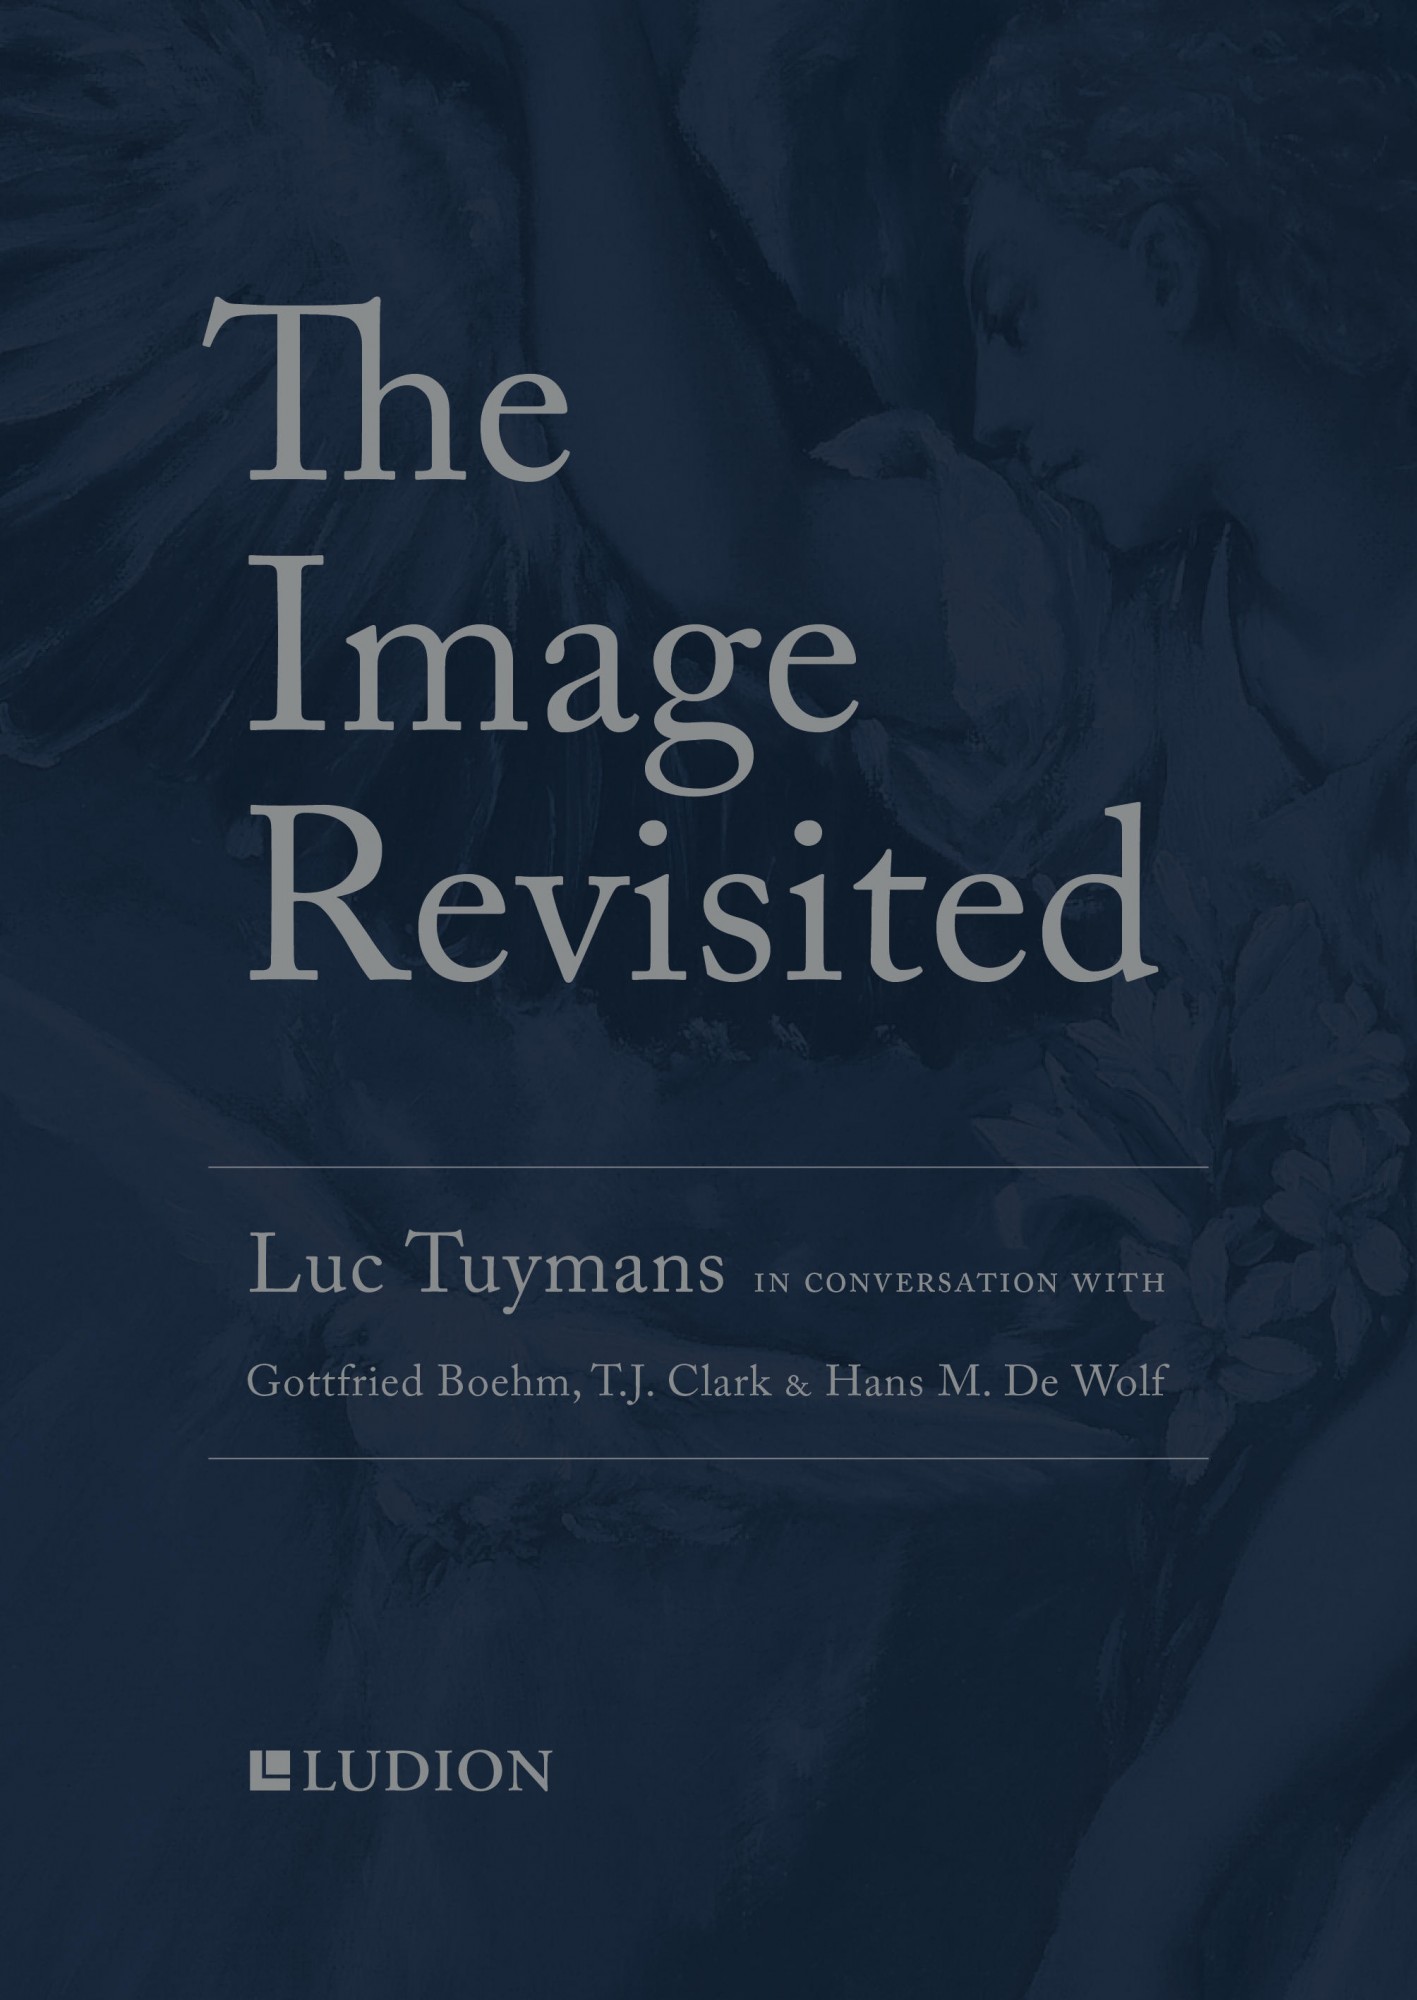 The Image Revisited: Luc Tuymans in conversation with Gottfried Boehm, T.J. Clark & Hans M. De Wolf